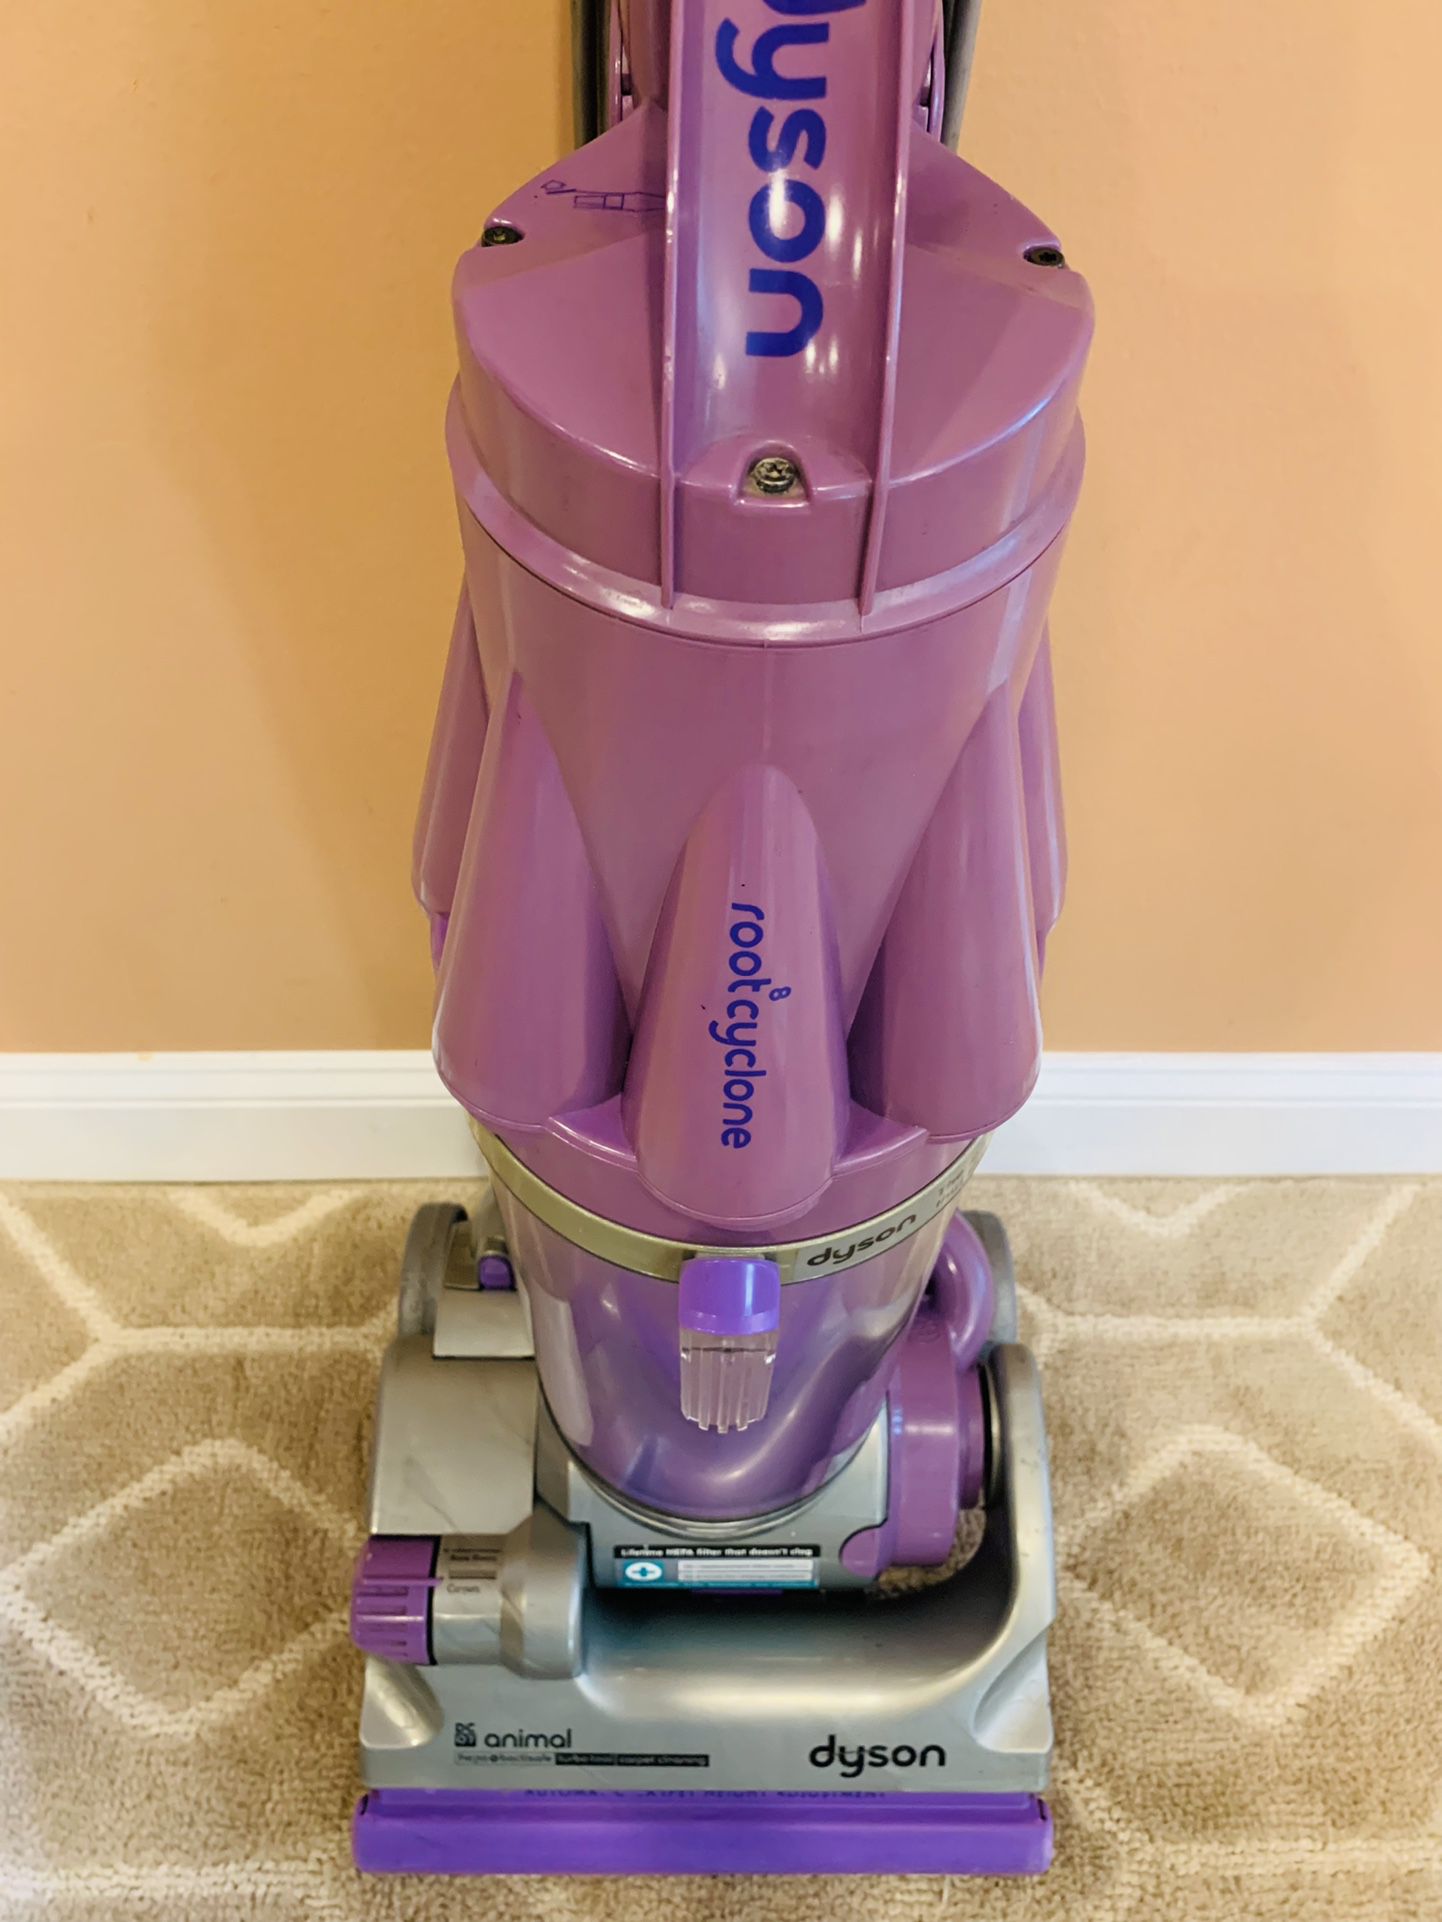 Dyson DC 07 animal vacuum cleaner